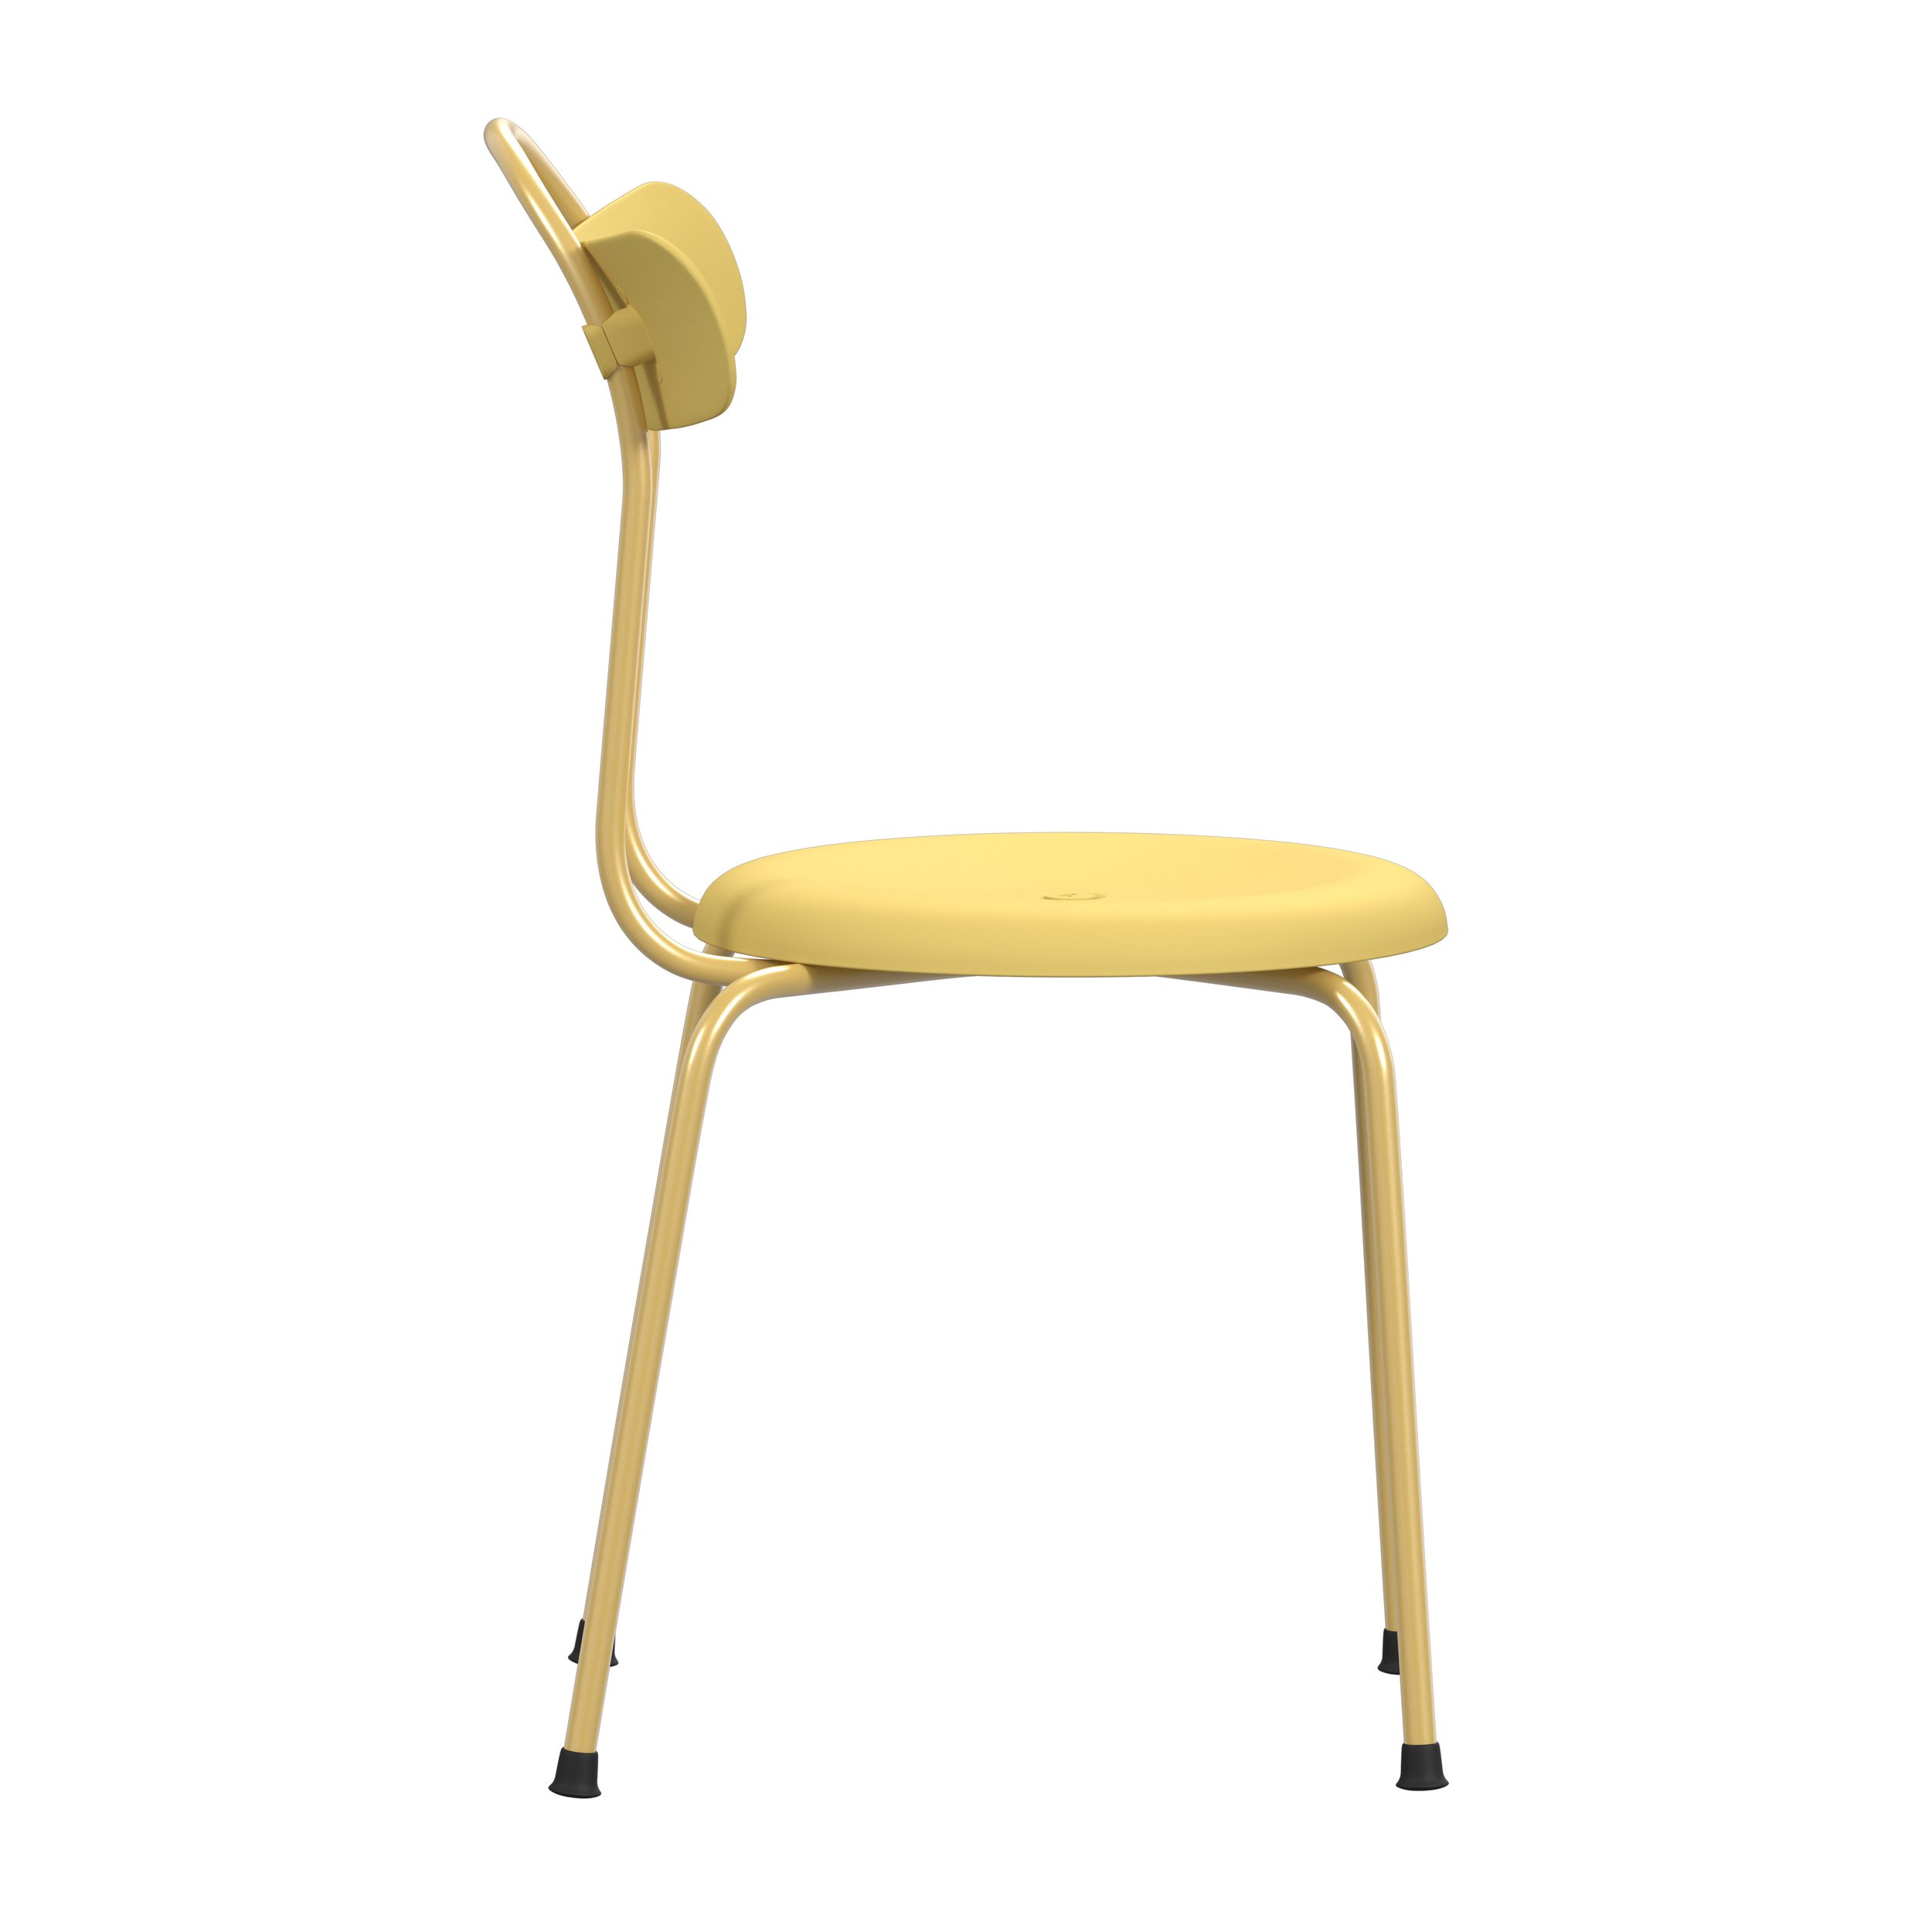 Lammhults_TaburettPlus_chair_yellow_yellow_side.jpeg